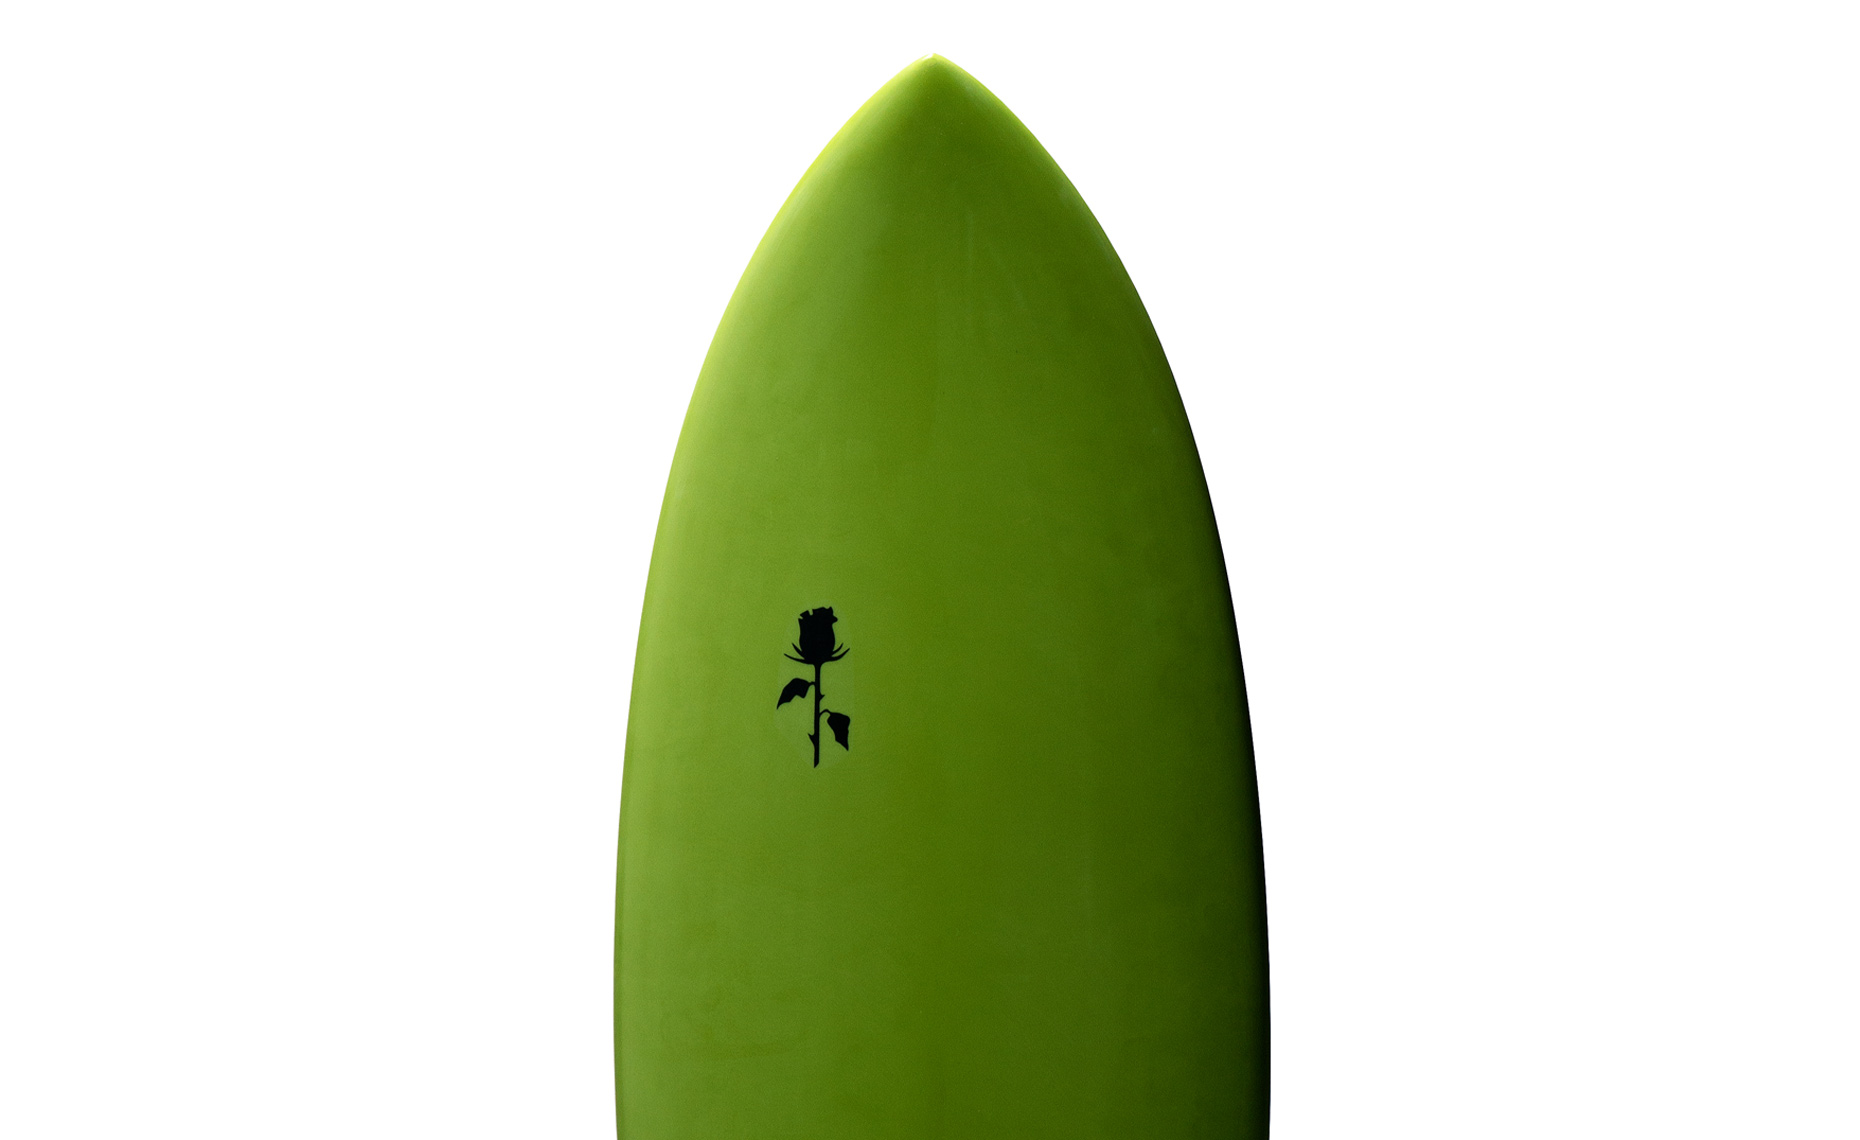 detail of green surfboard